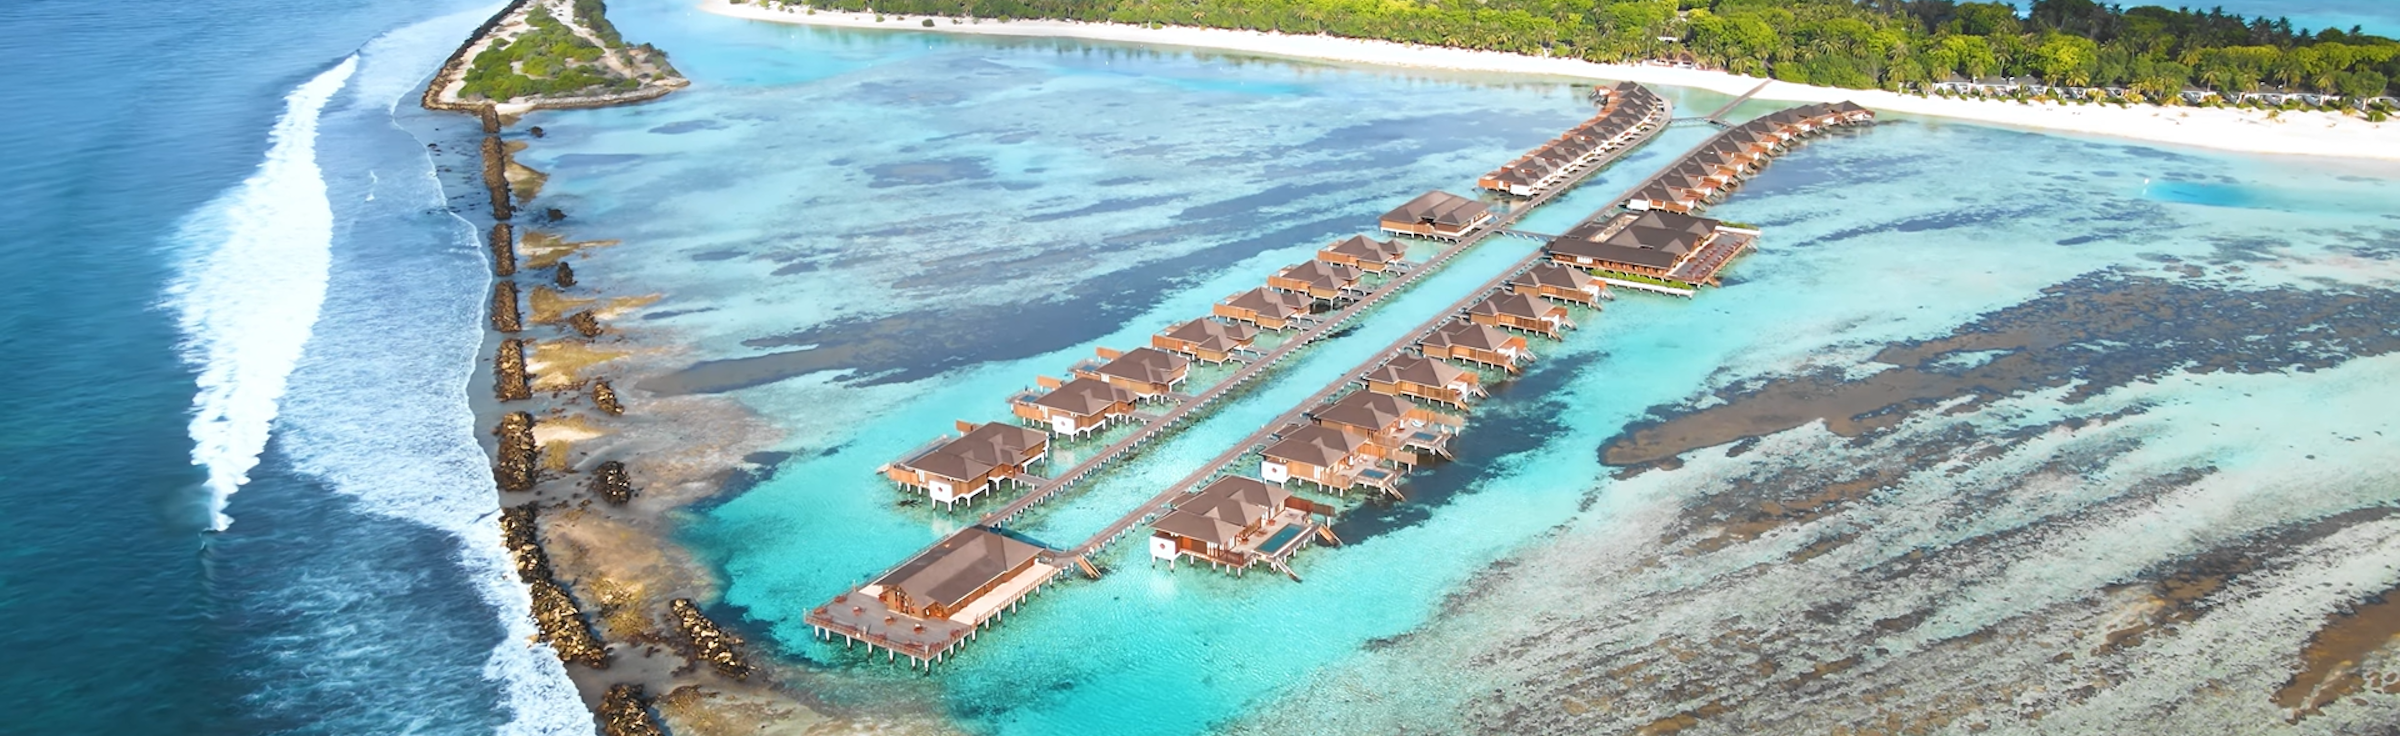 Villa Nautica Maldives Packages